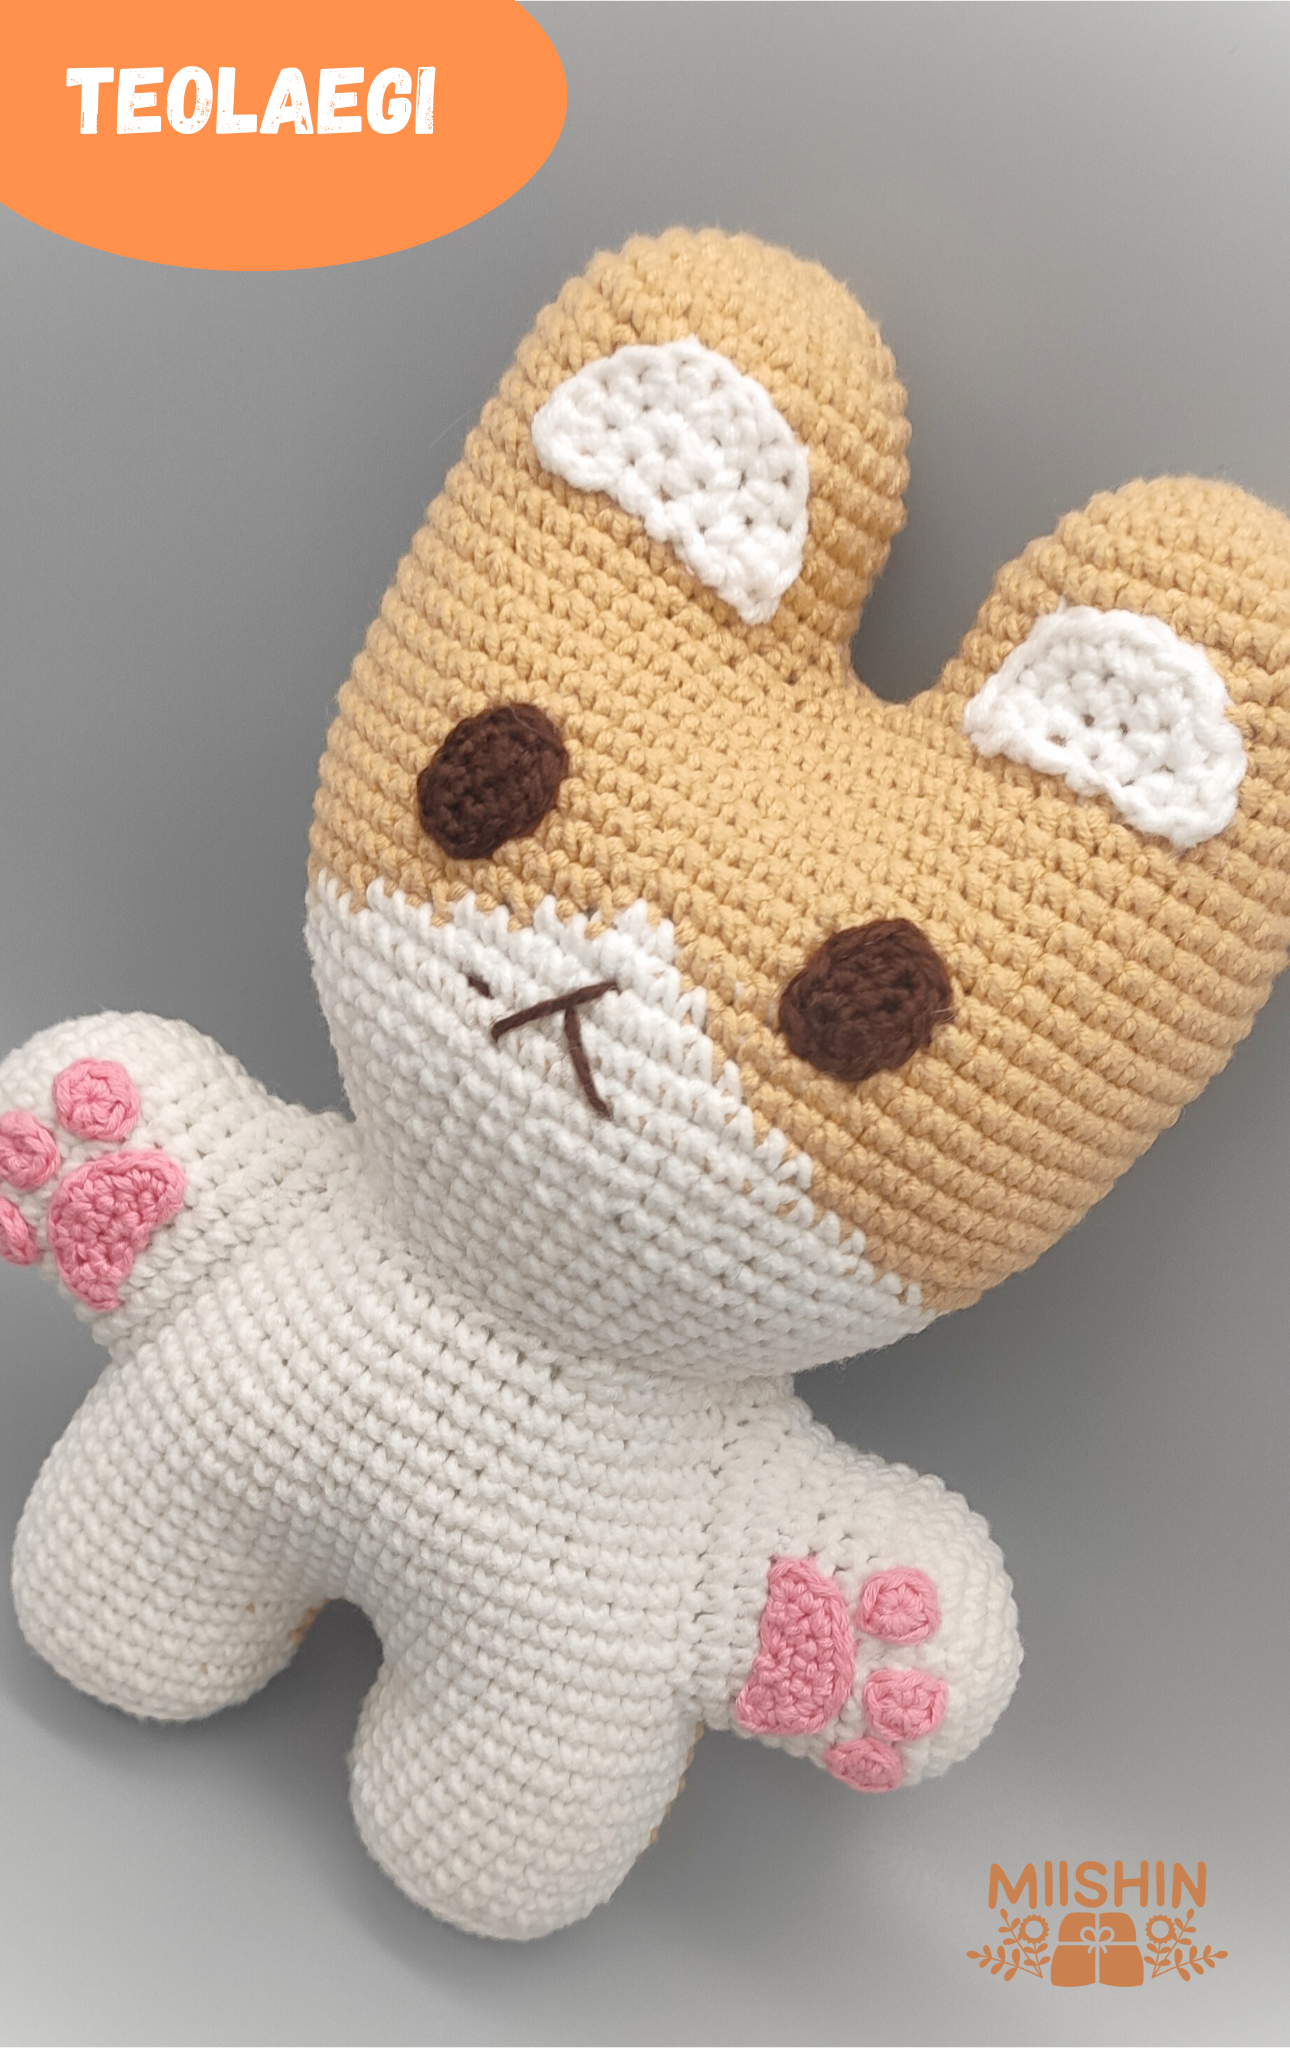 TEOLAEGI by Baekhyun from EXO, Crochet Plushie